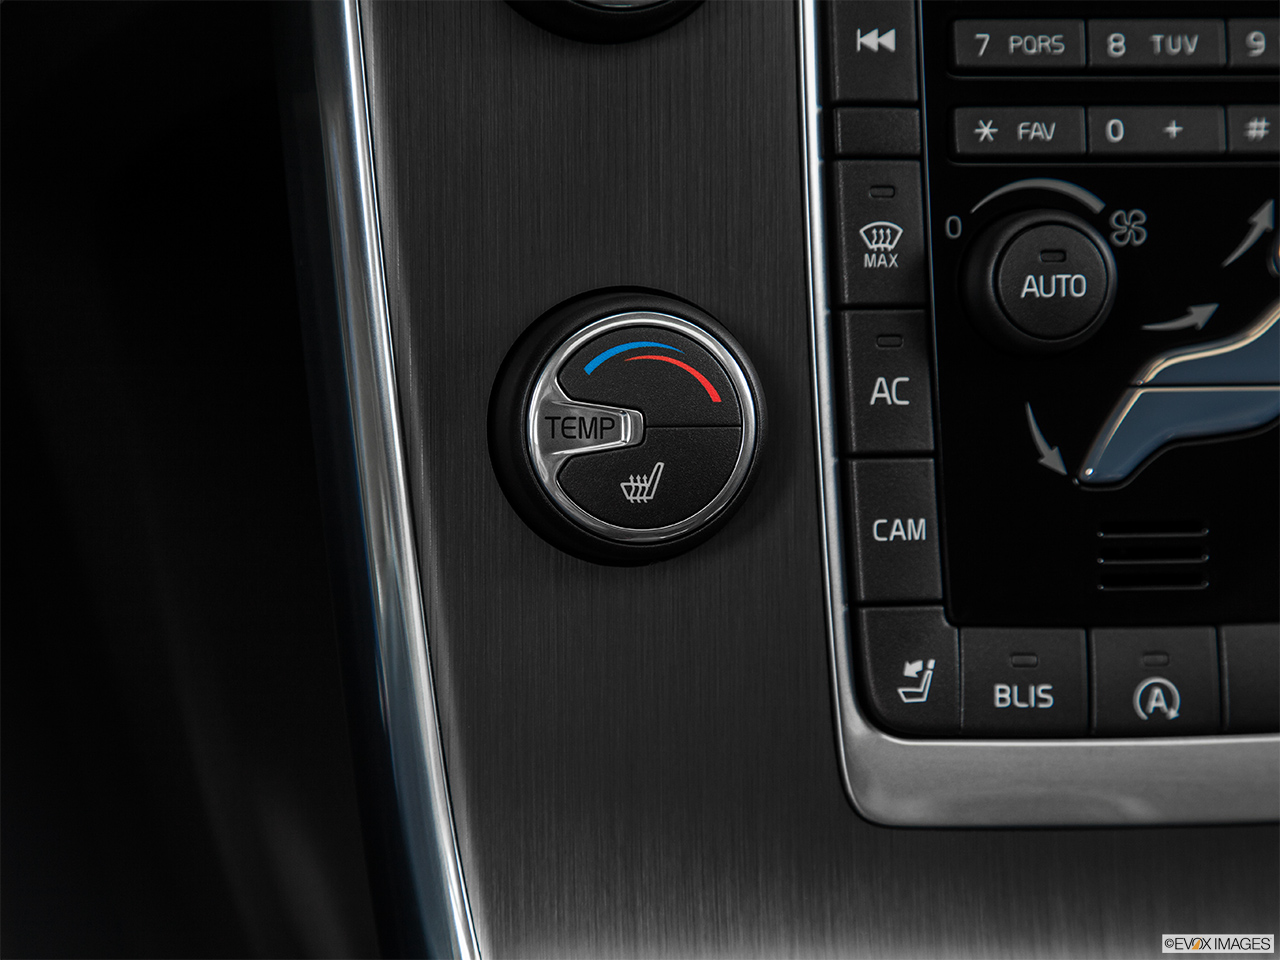 2015 Volvo V60 Premier Plus Heated Seats Control 